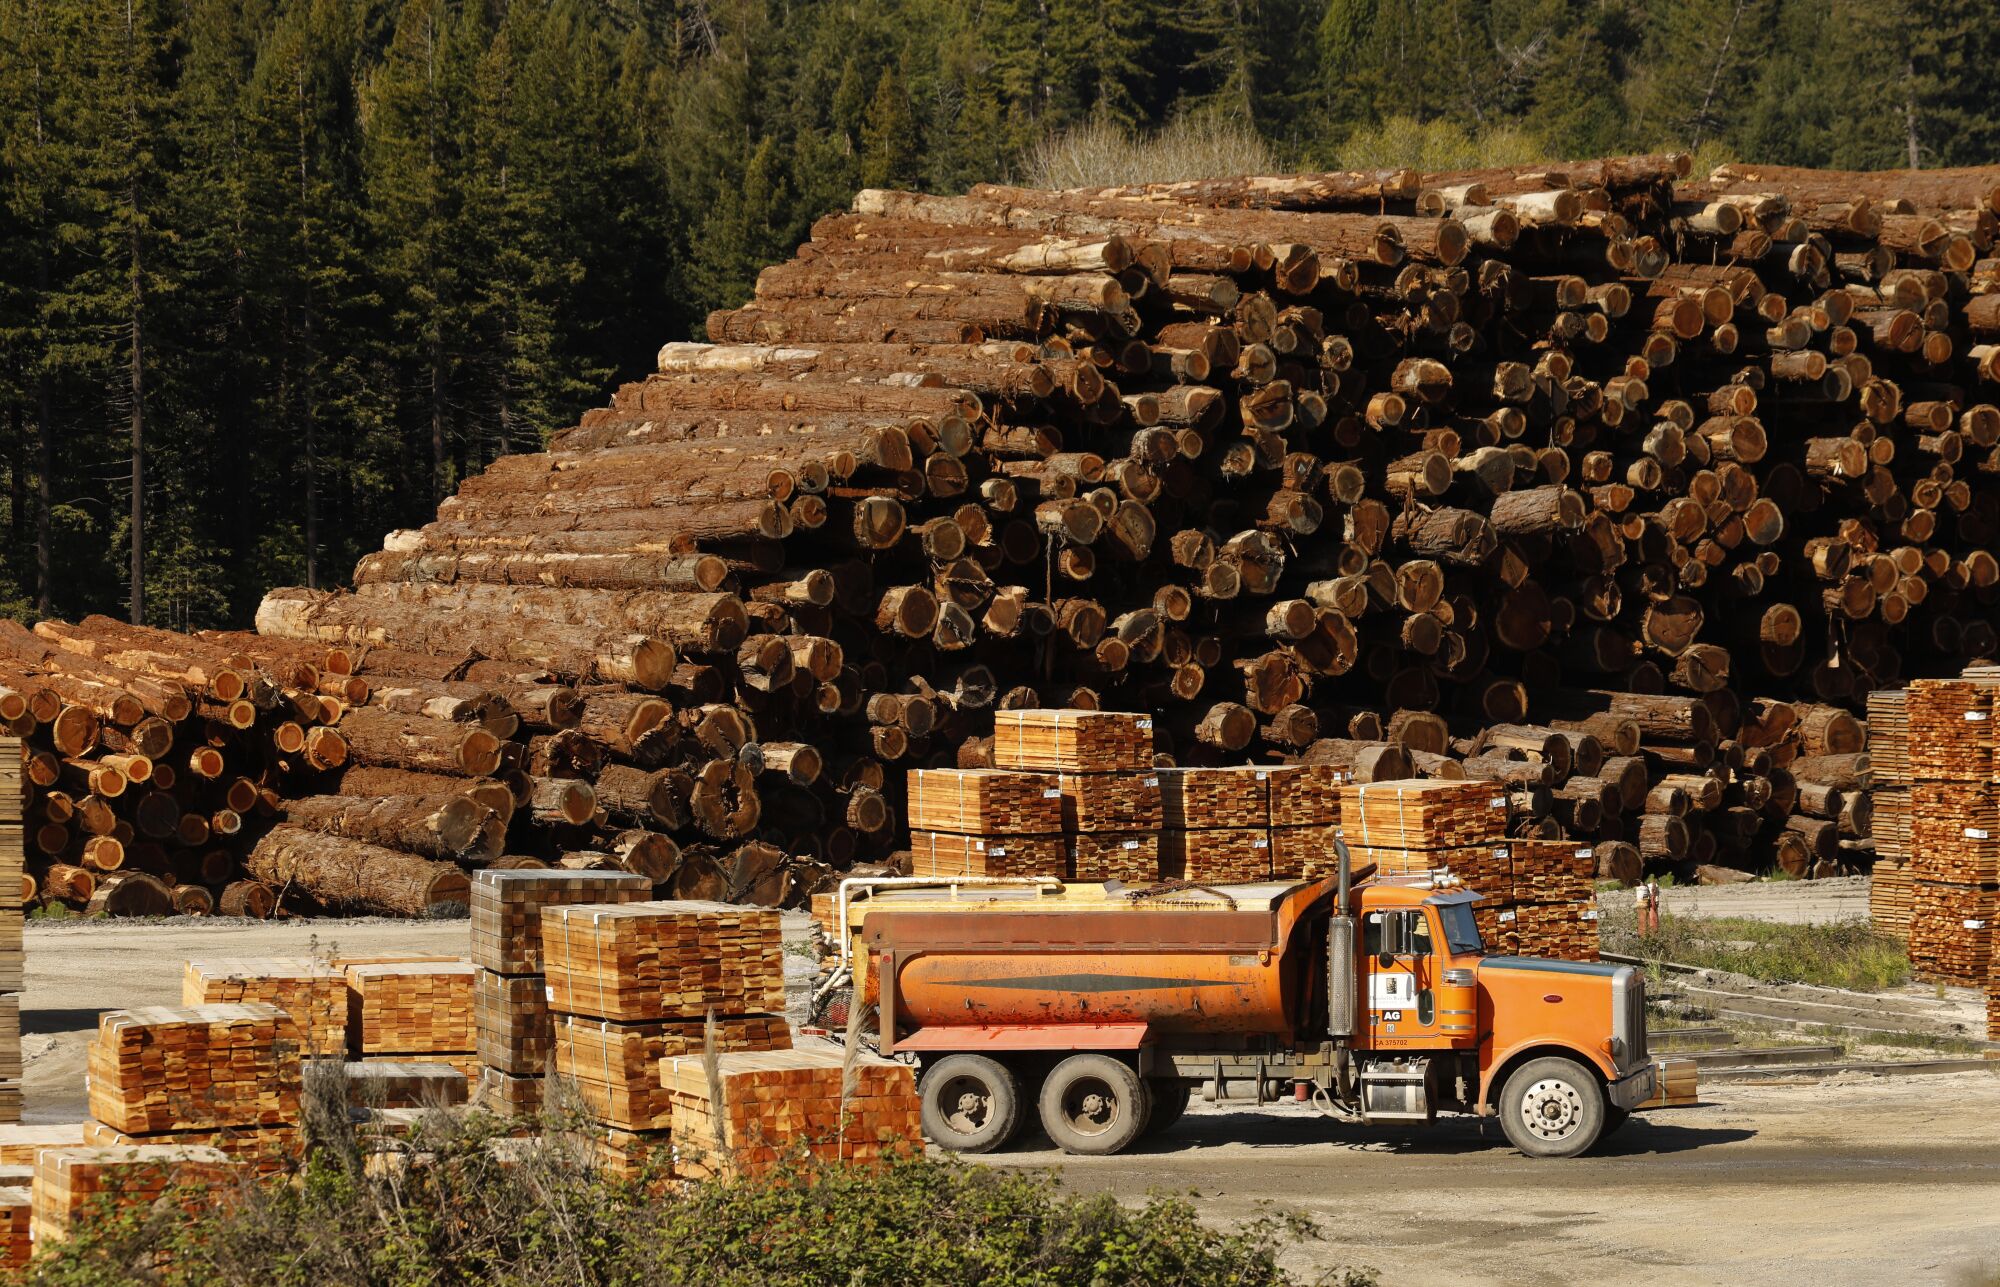 Humbolt Redwood Company sawmill